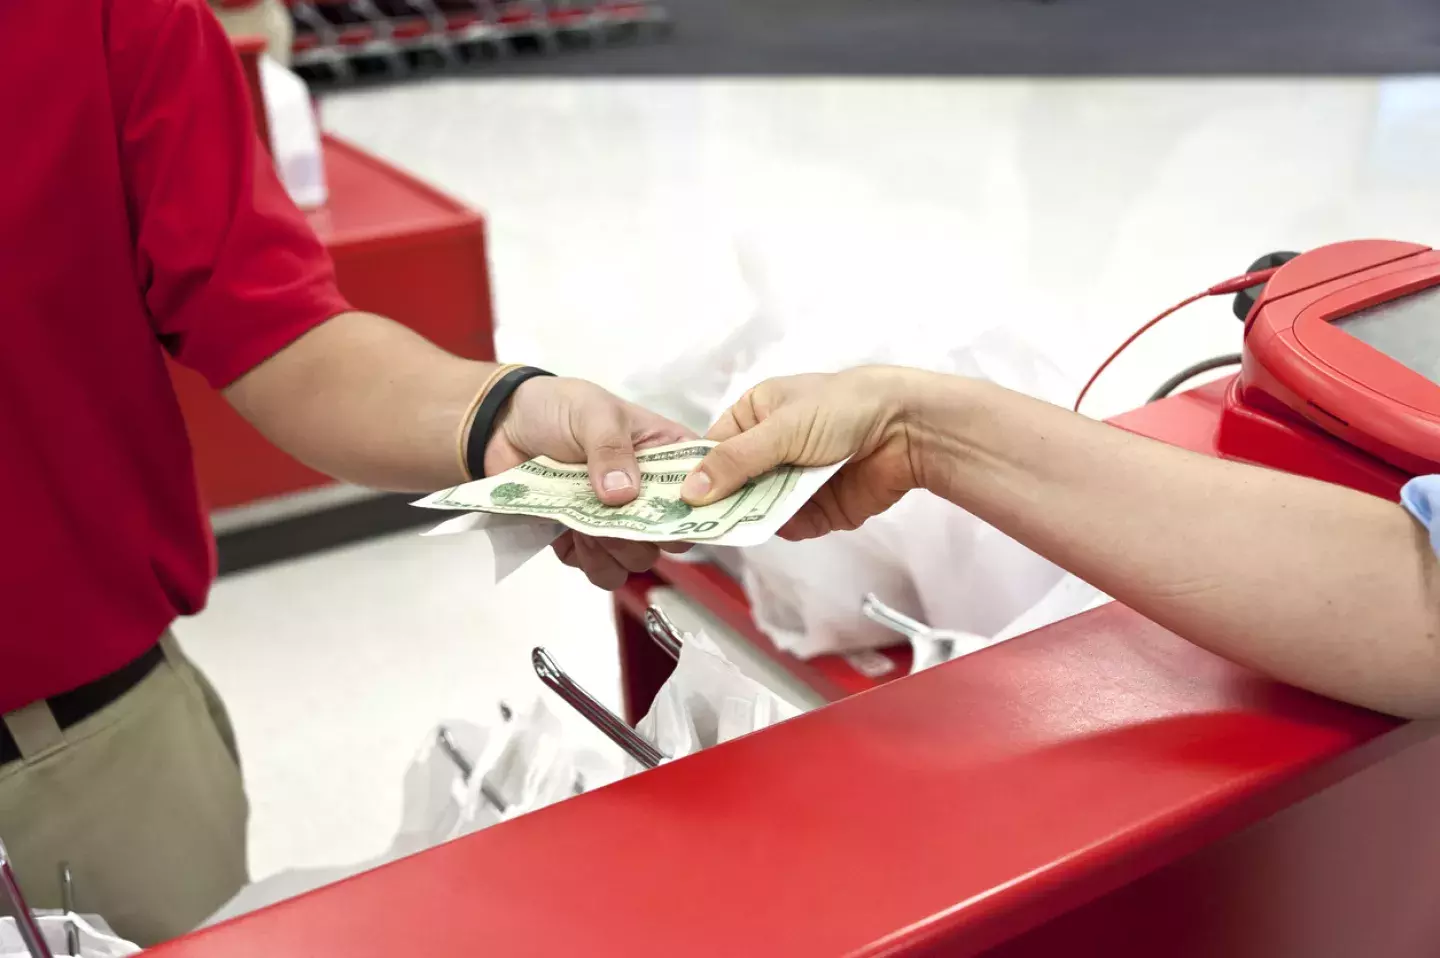 Customer handing employee cash in retail store